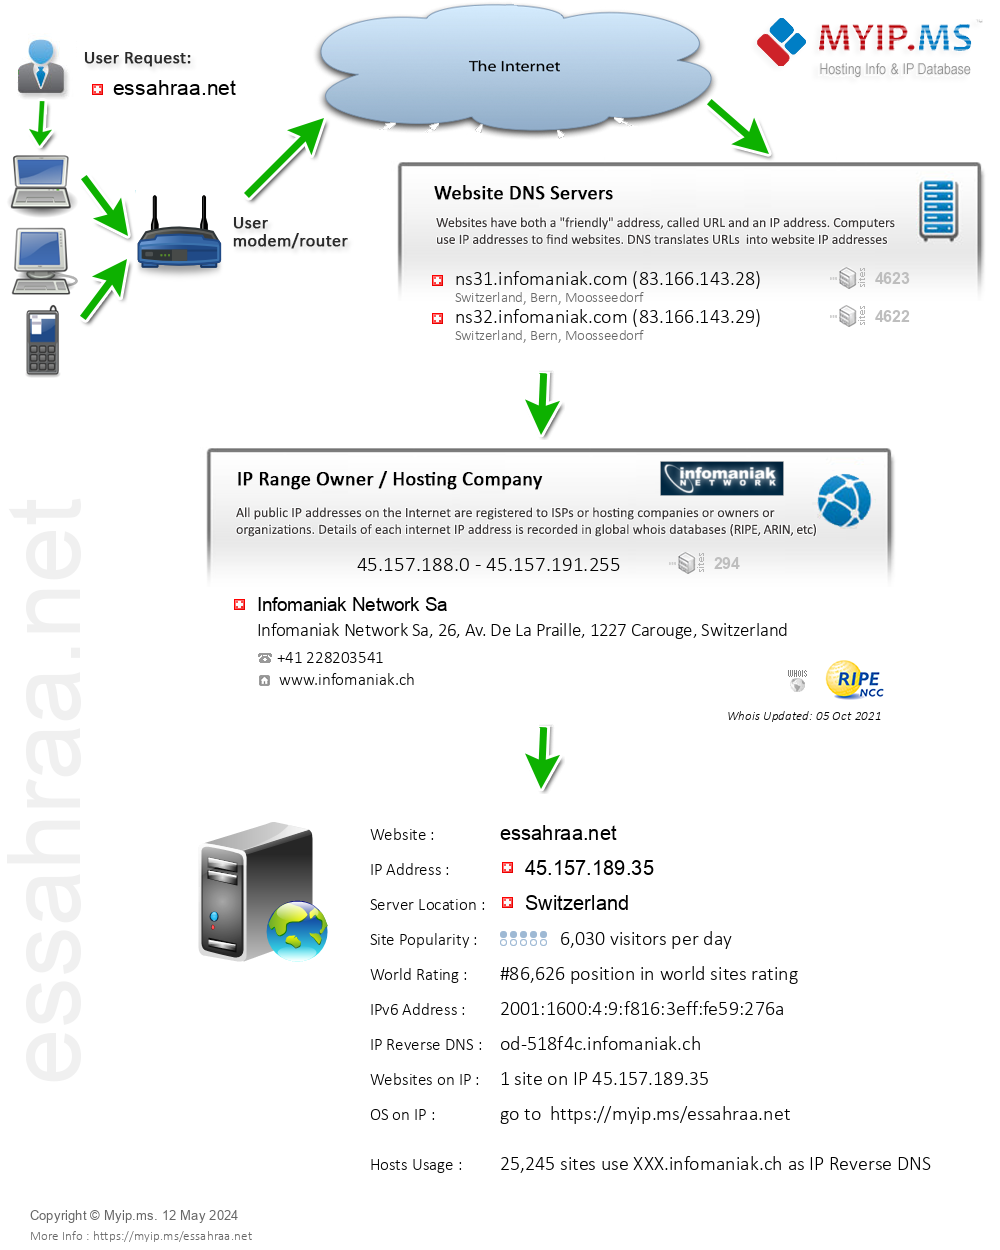 Essahraa.net - Website Hosting Visual IP Diagram